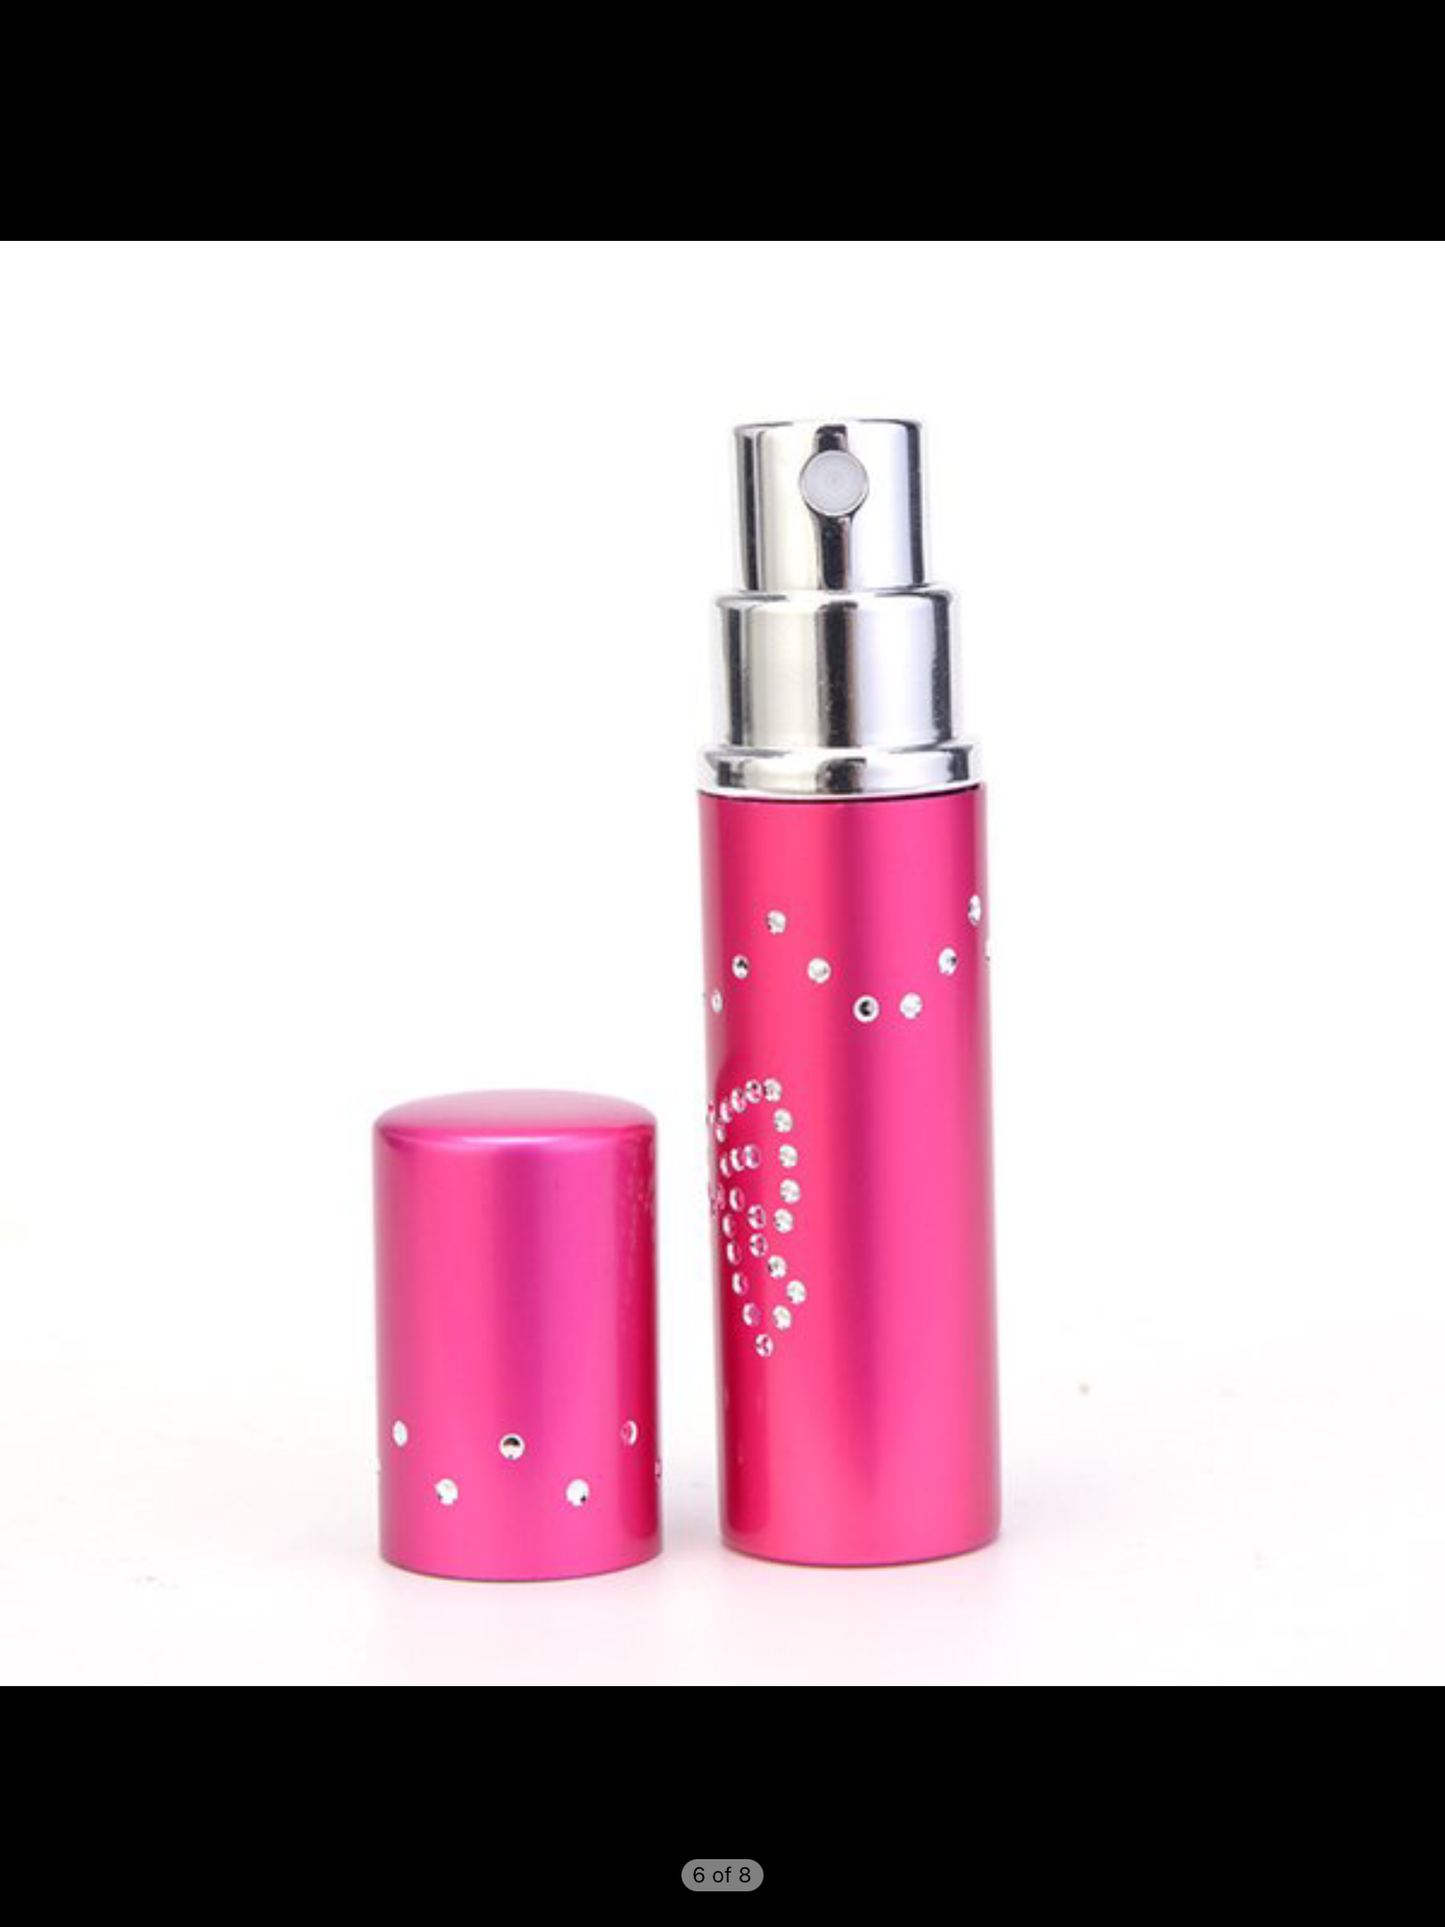 Ribbon Spray Bottle, 5 ml. Designer Perfume Oils, Pure Fragrances, High Quality Fragrances